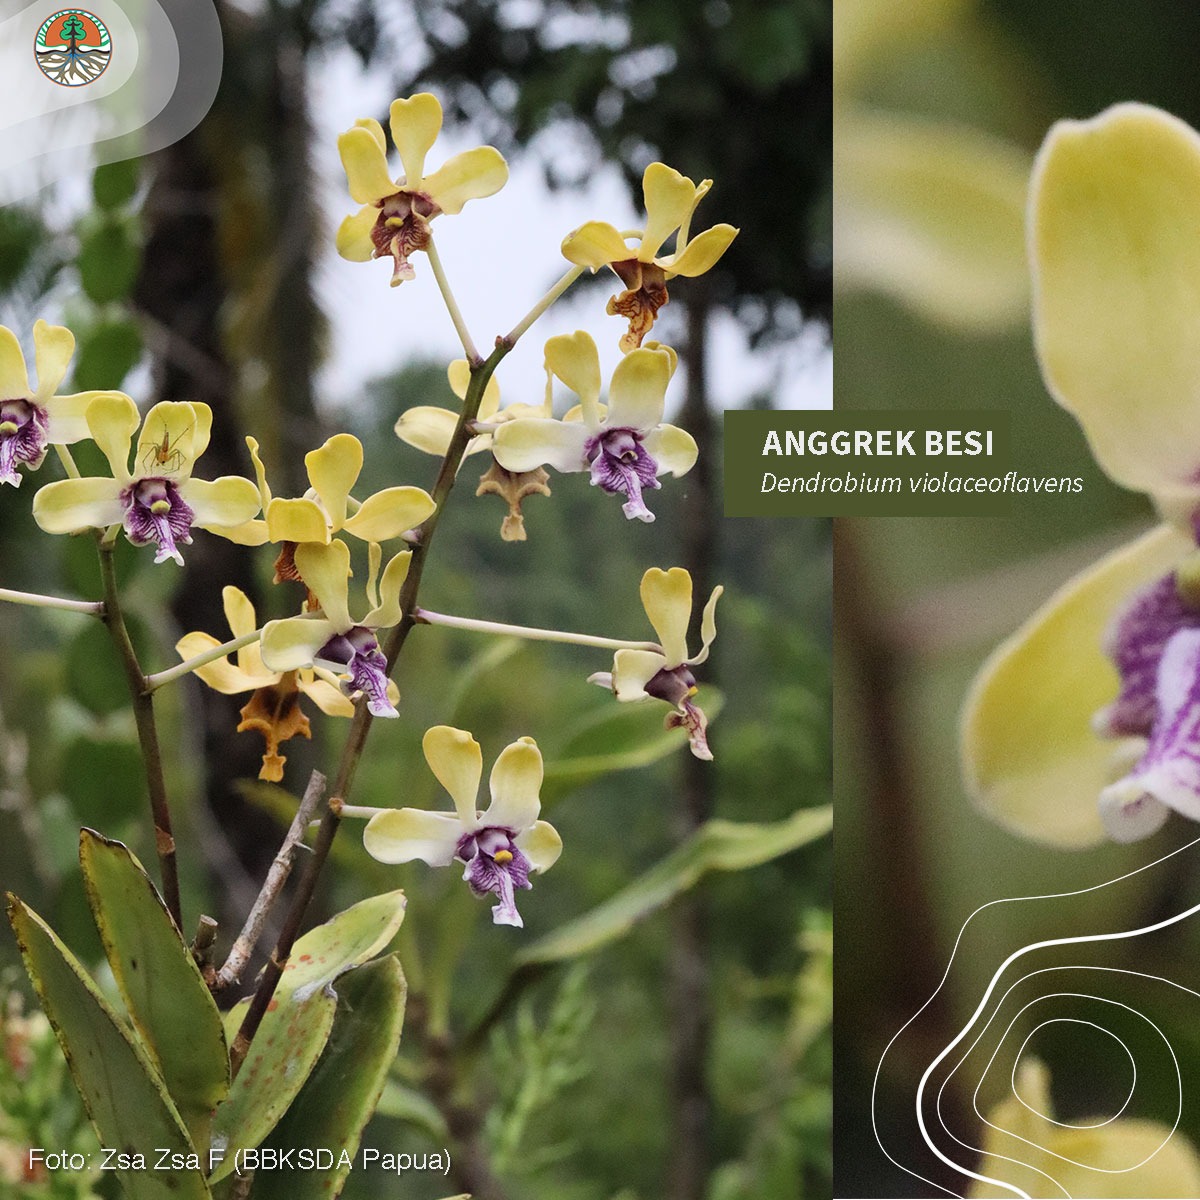 #SobatHijau, yuk kenalan sama puspa khas dari #Papua. Si cantik yang kharismatik ini adlh Anggrek Besi (Dendrobium violaceoflavens). 

Bunganya khas & tahan lama, perpaduan warna kuning dgn ungu violet seperti namanya viola - flavens serta memiliki aroma harum yang kuat.